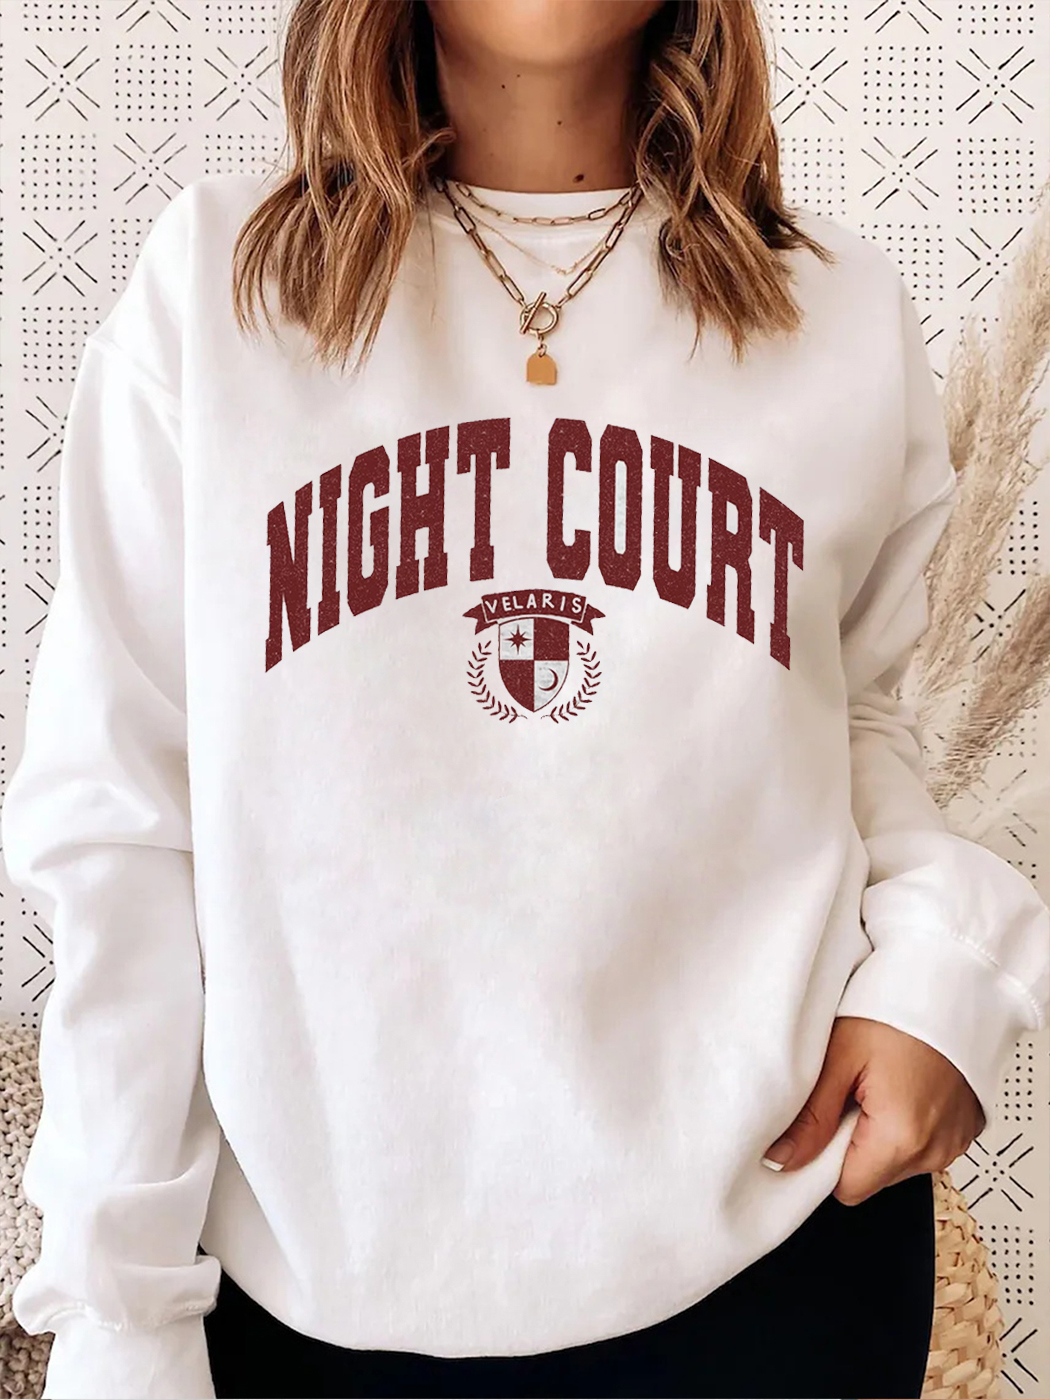 The Night Court Sweatshirt, Velaris Sweatshirt / [blueesa] /